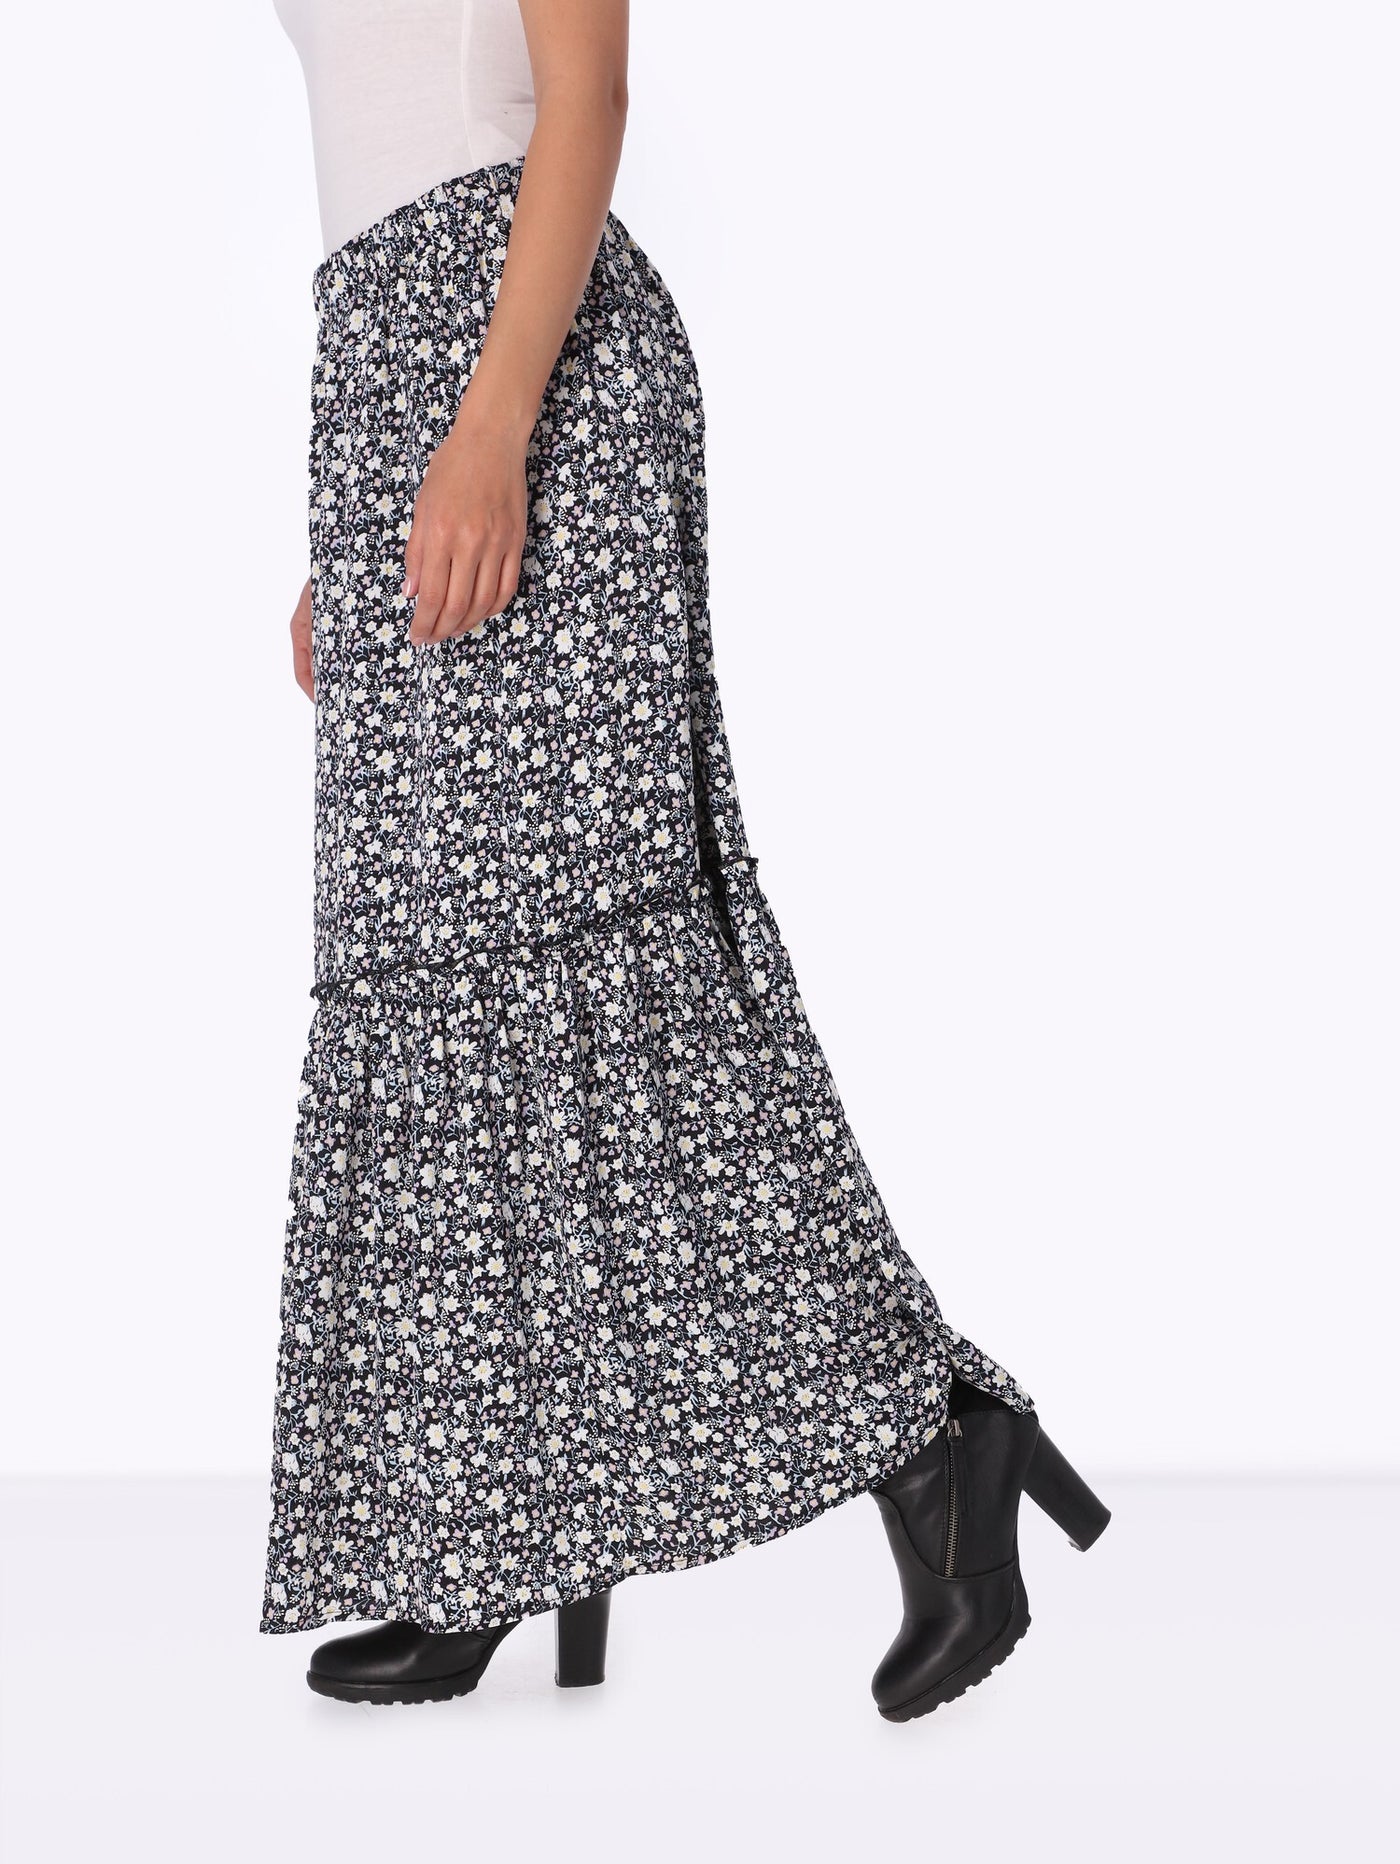 Skirt - Long Length - Floral Print